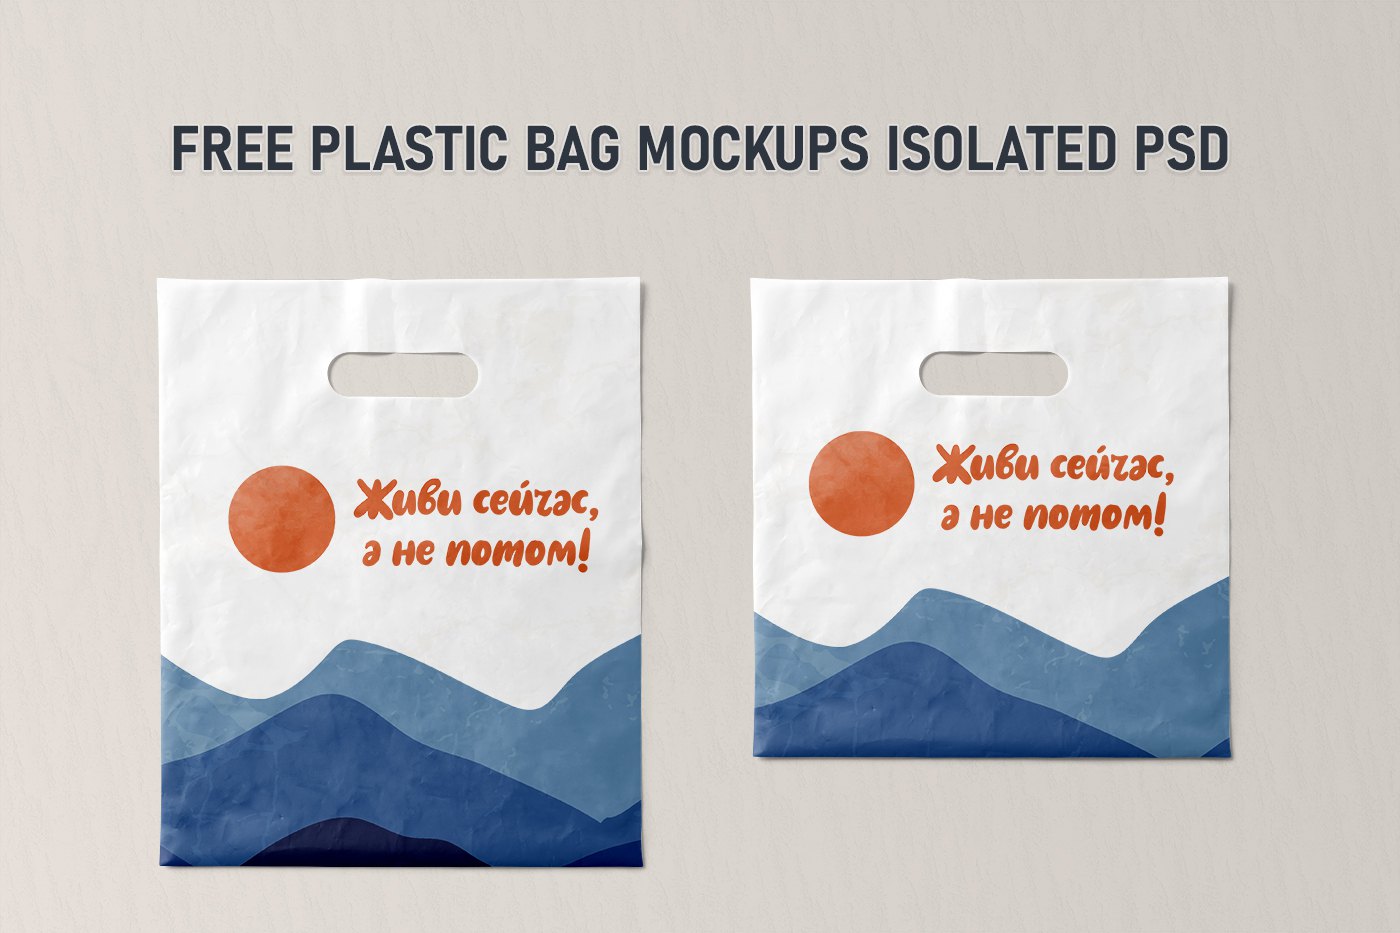 Free Plastic Bag Mockups Isolated PSD